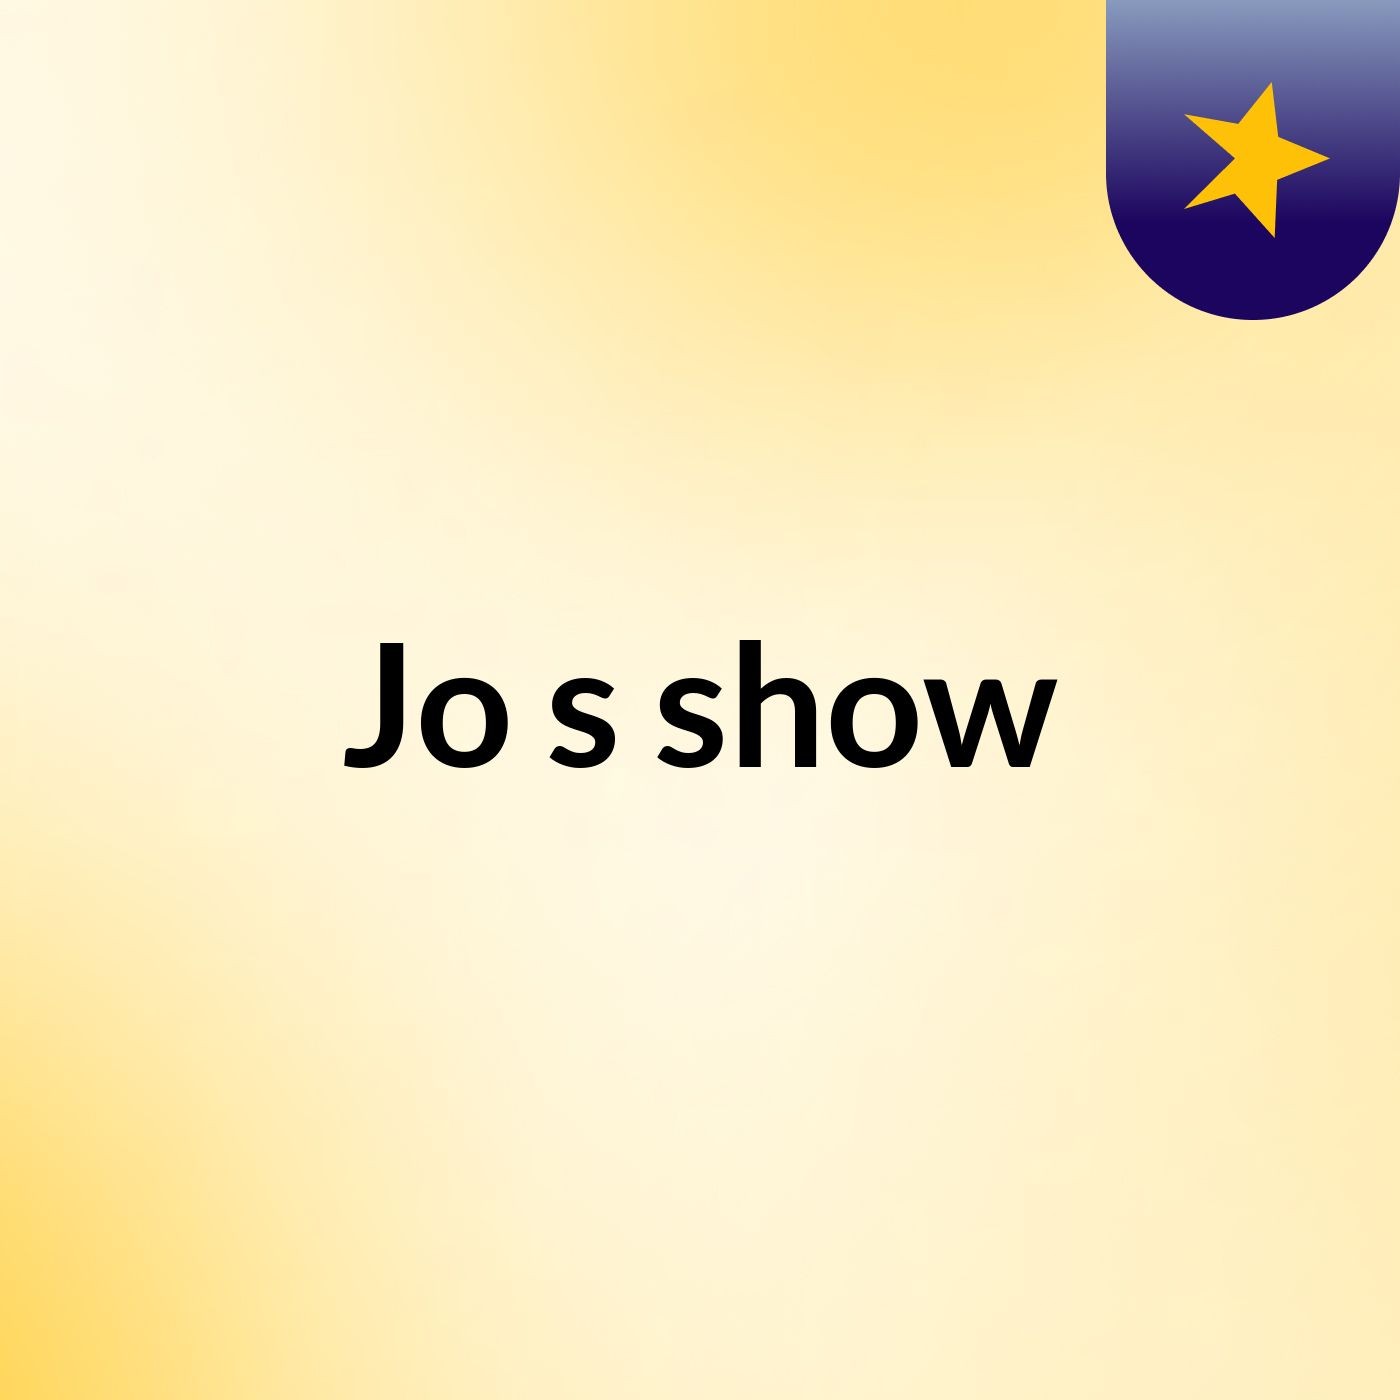 Jo's show